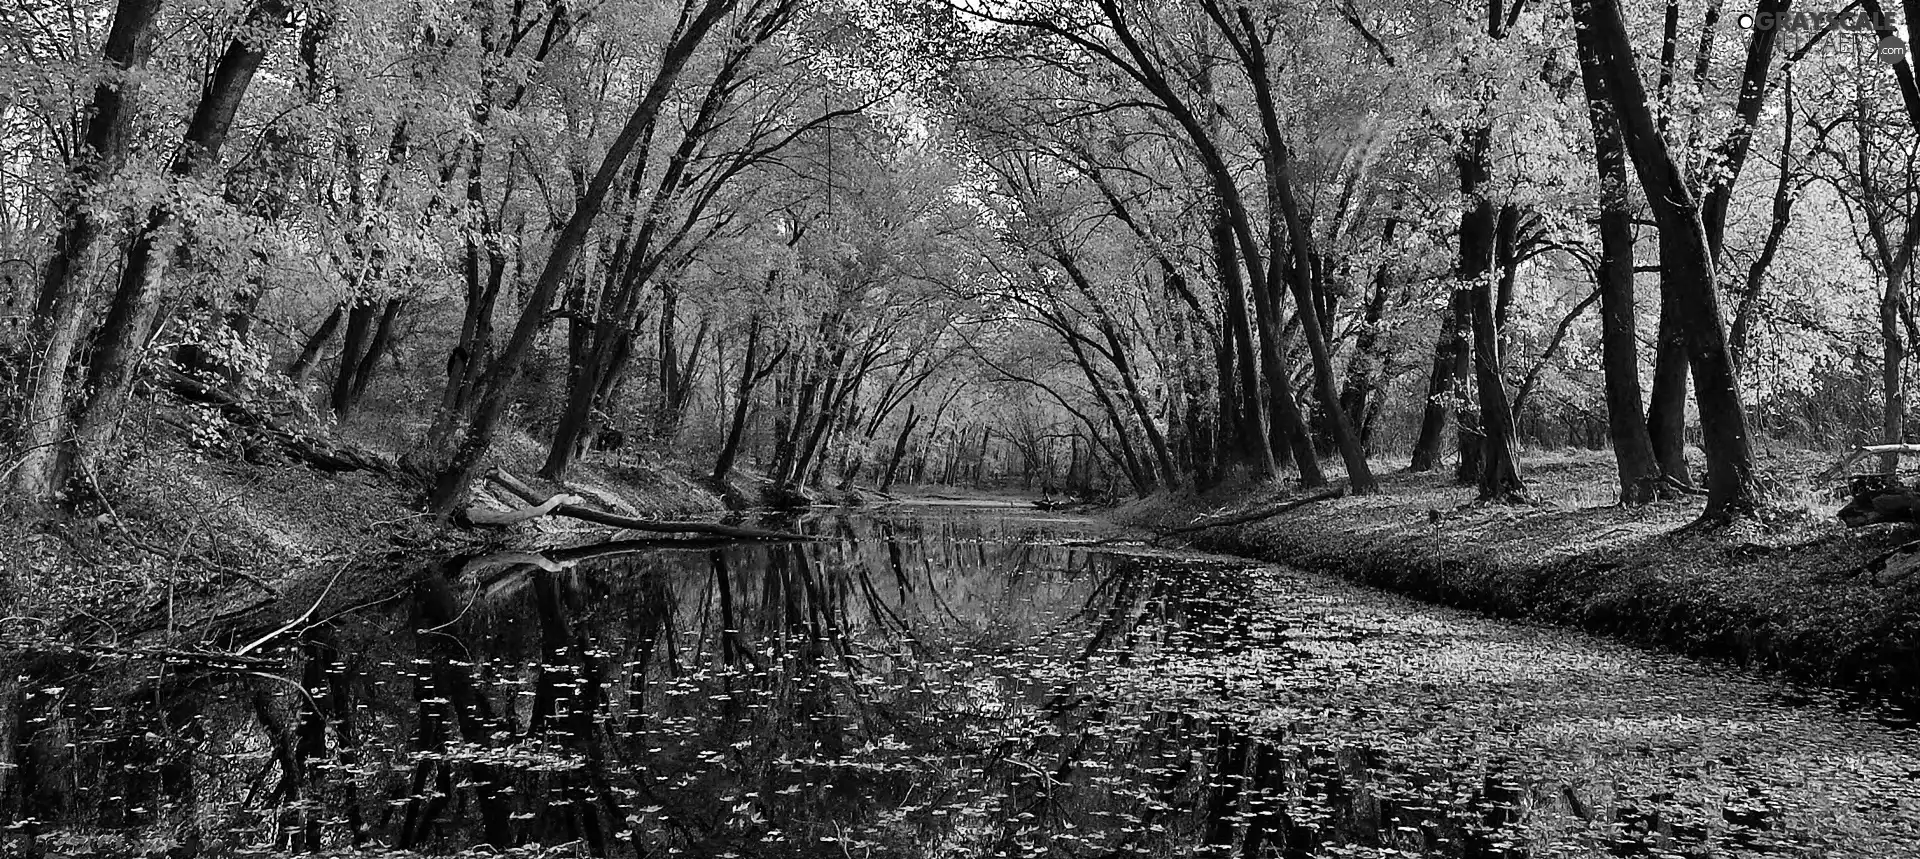 River, autumn, Leaf, reflection, fallen, forest